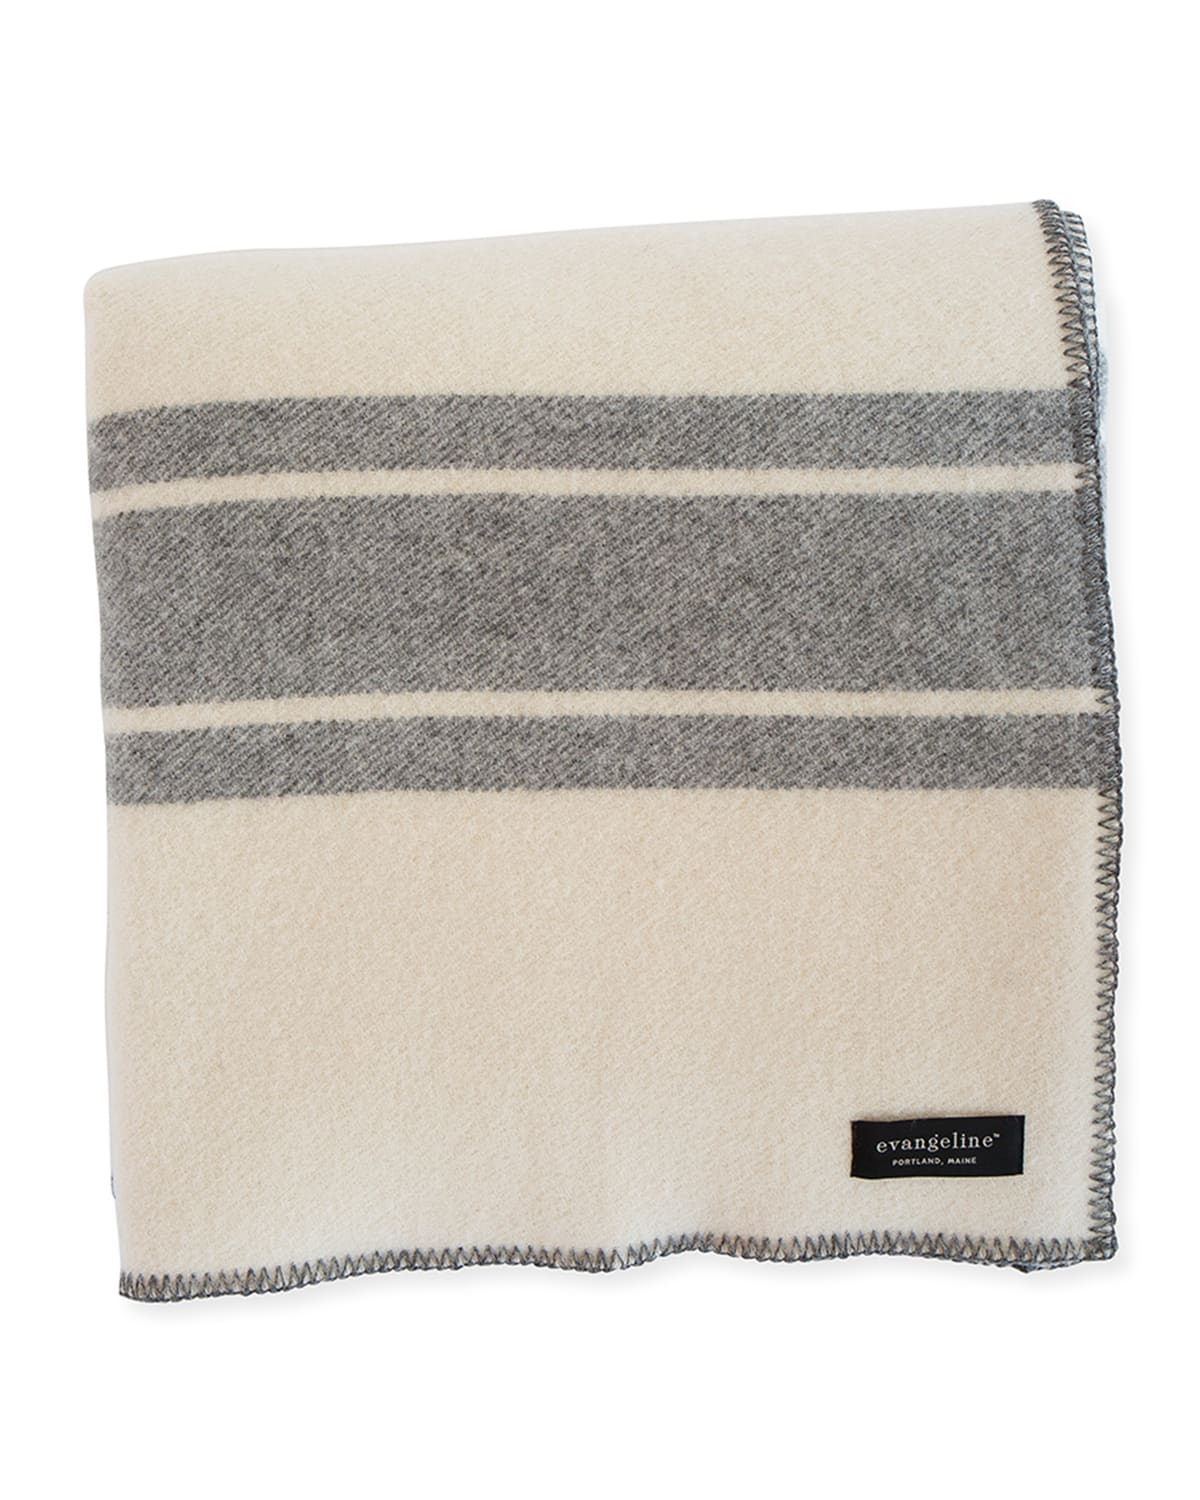 Evangeline Linens A Frame Merino Wool Twin Blanket, Classic Gray